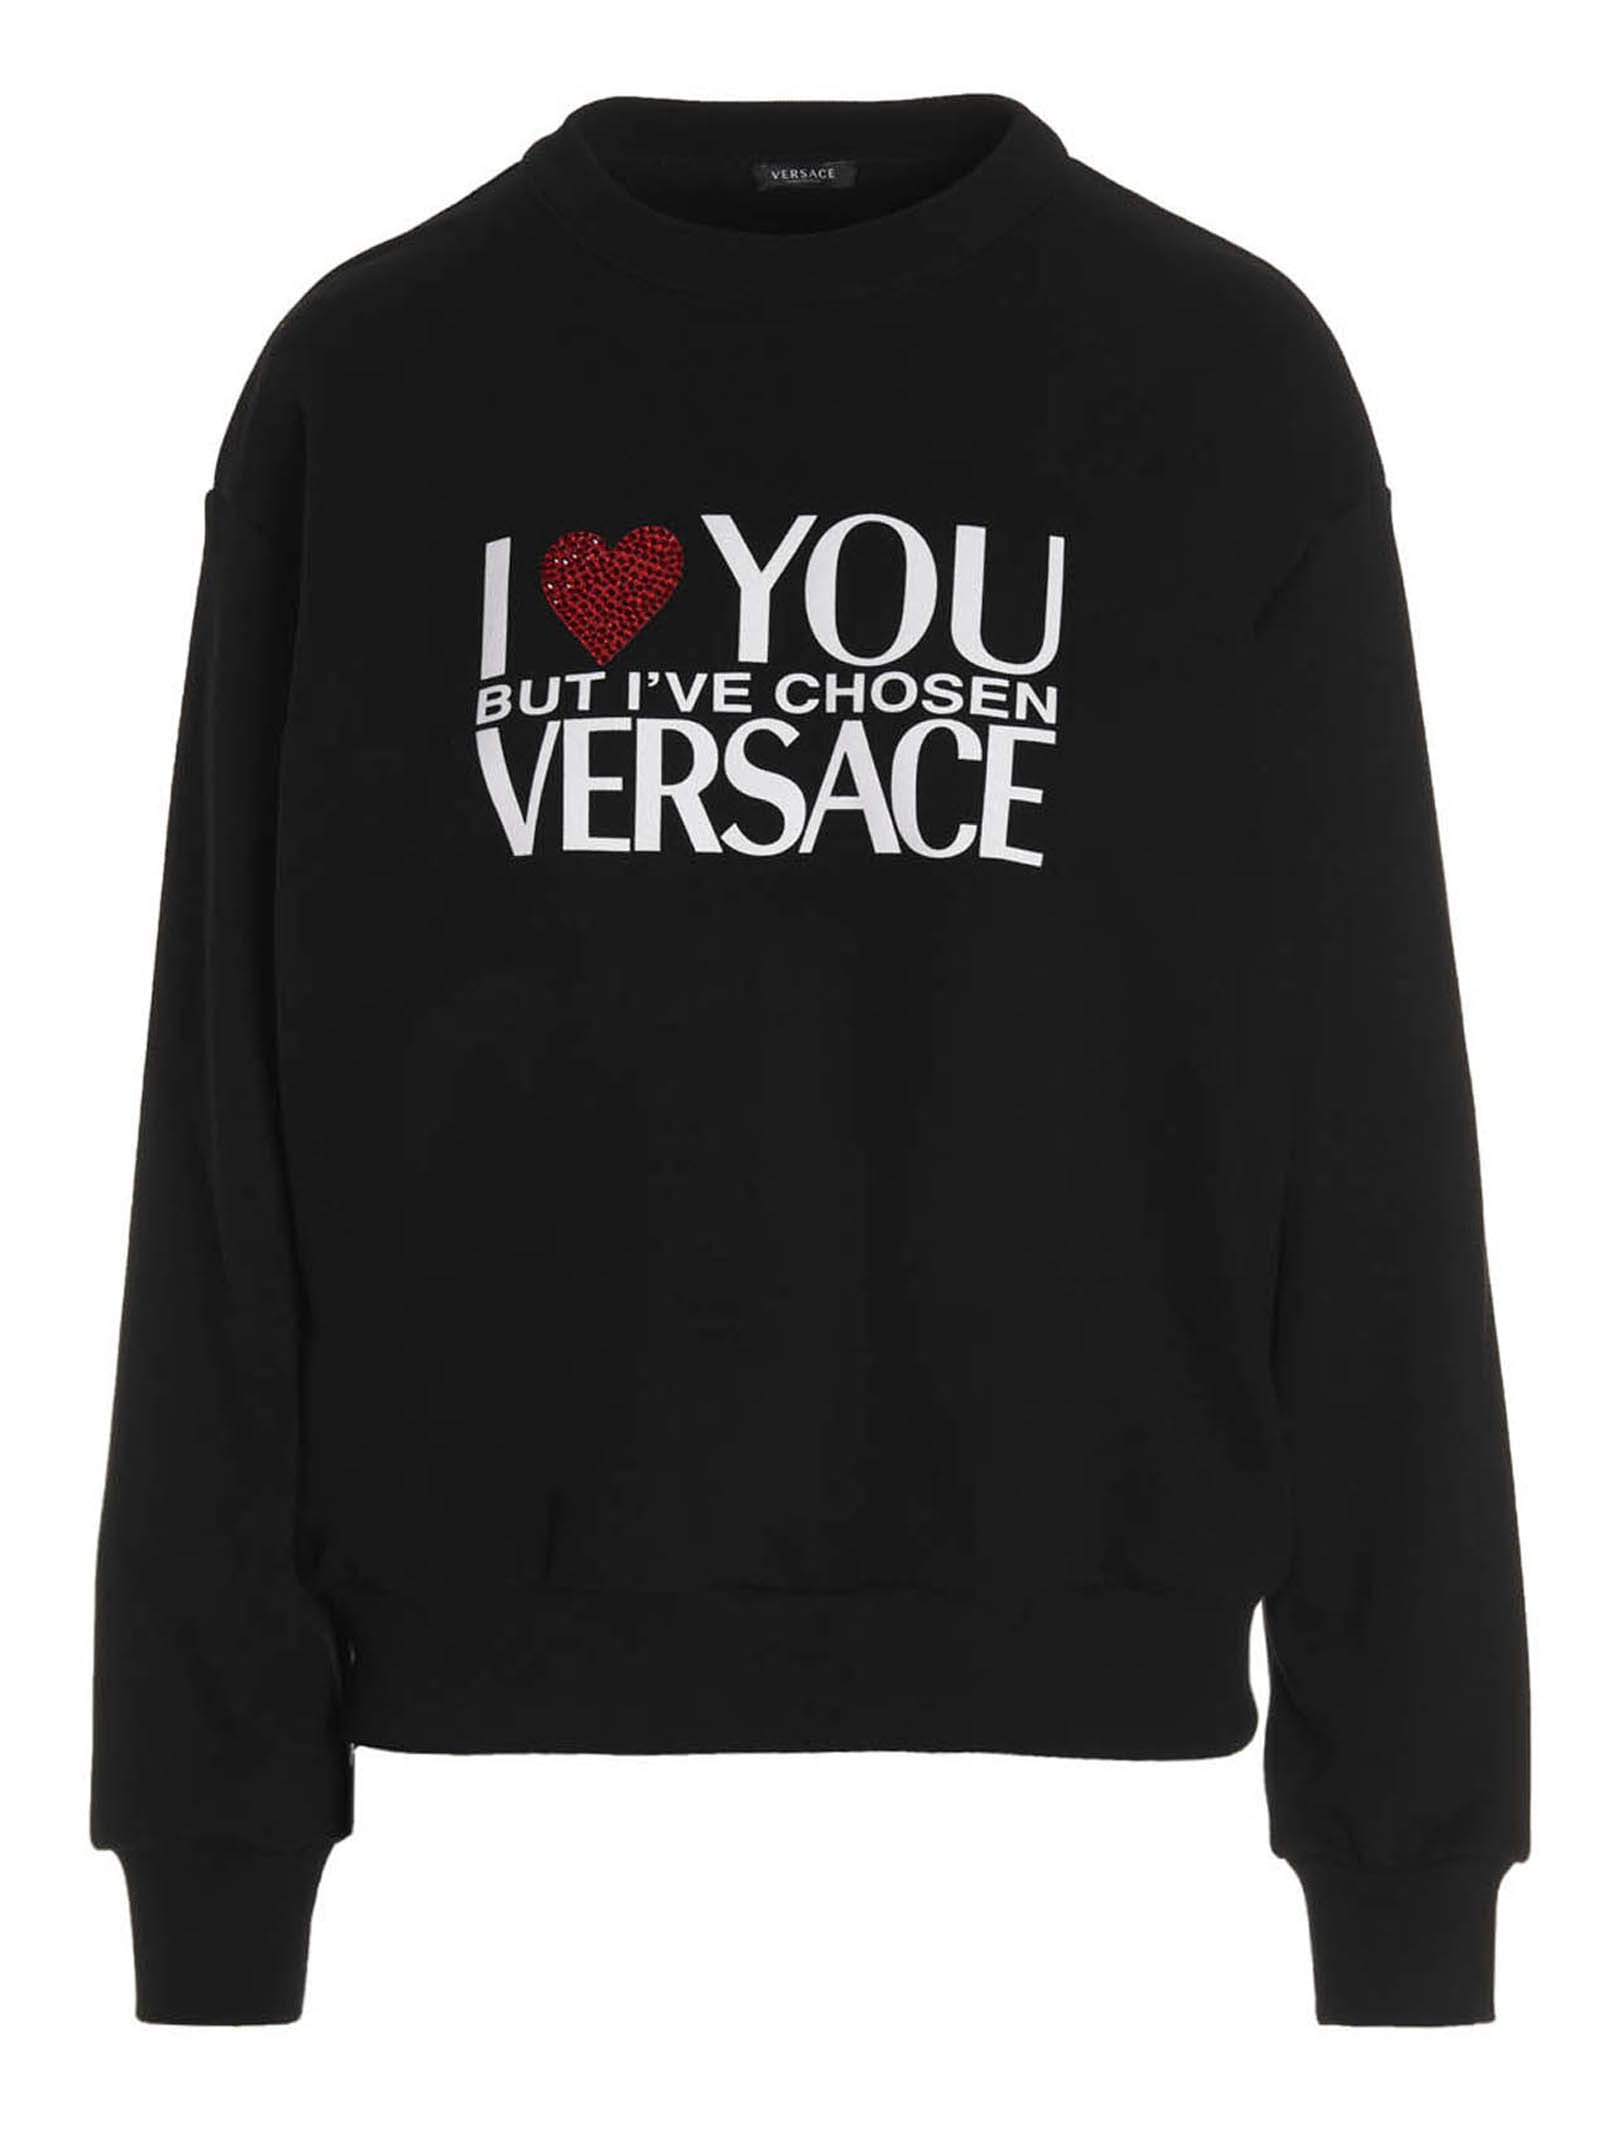 Versace i Love You Hoodie